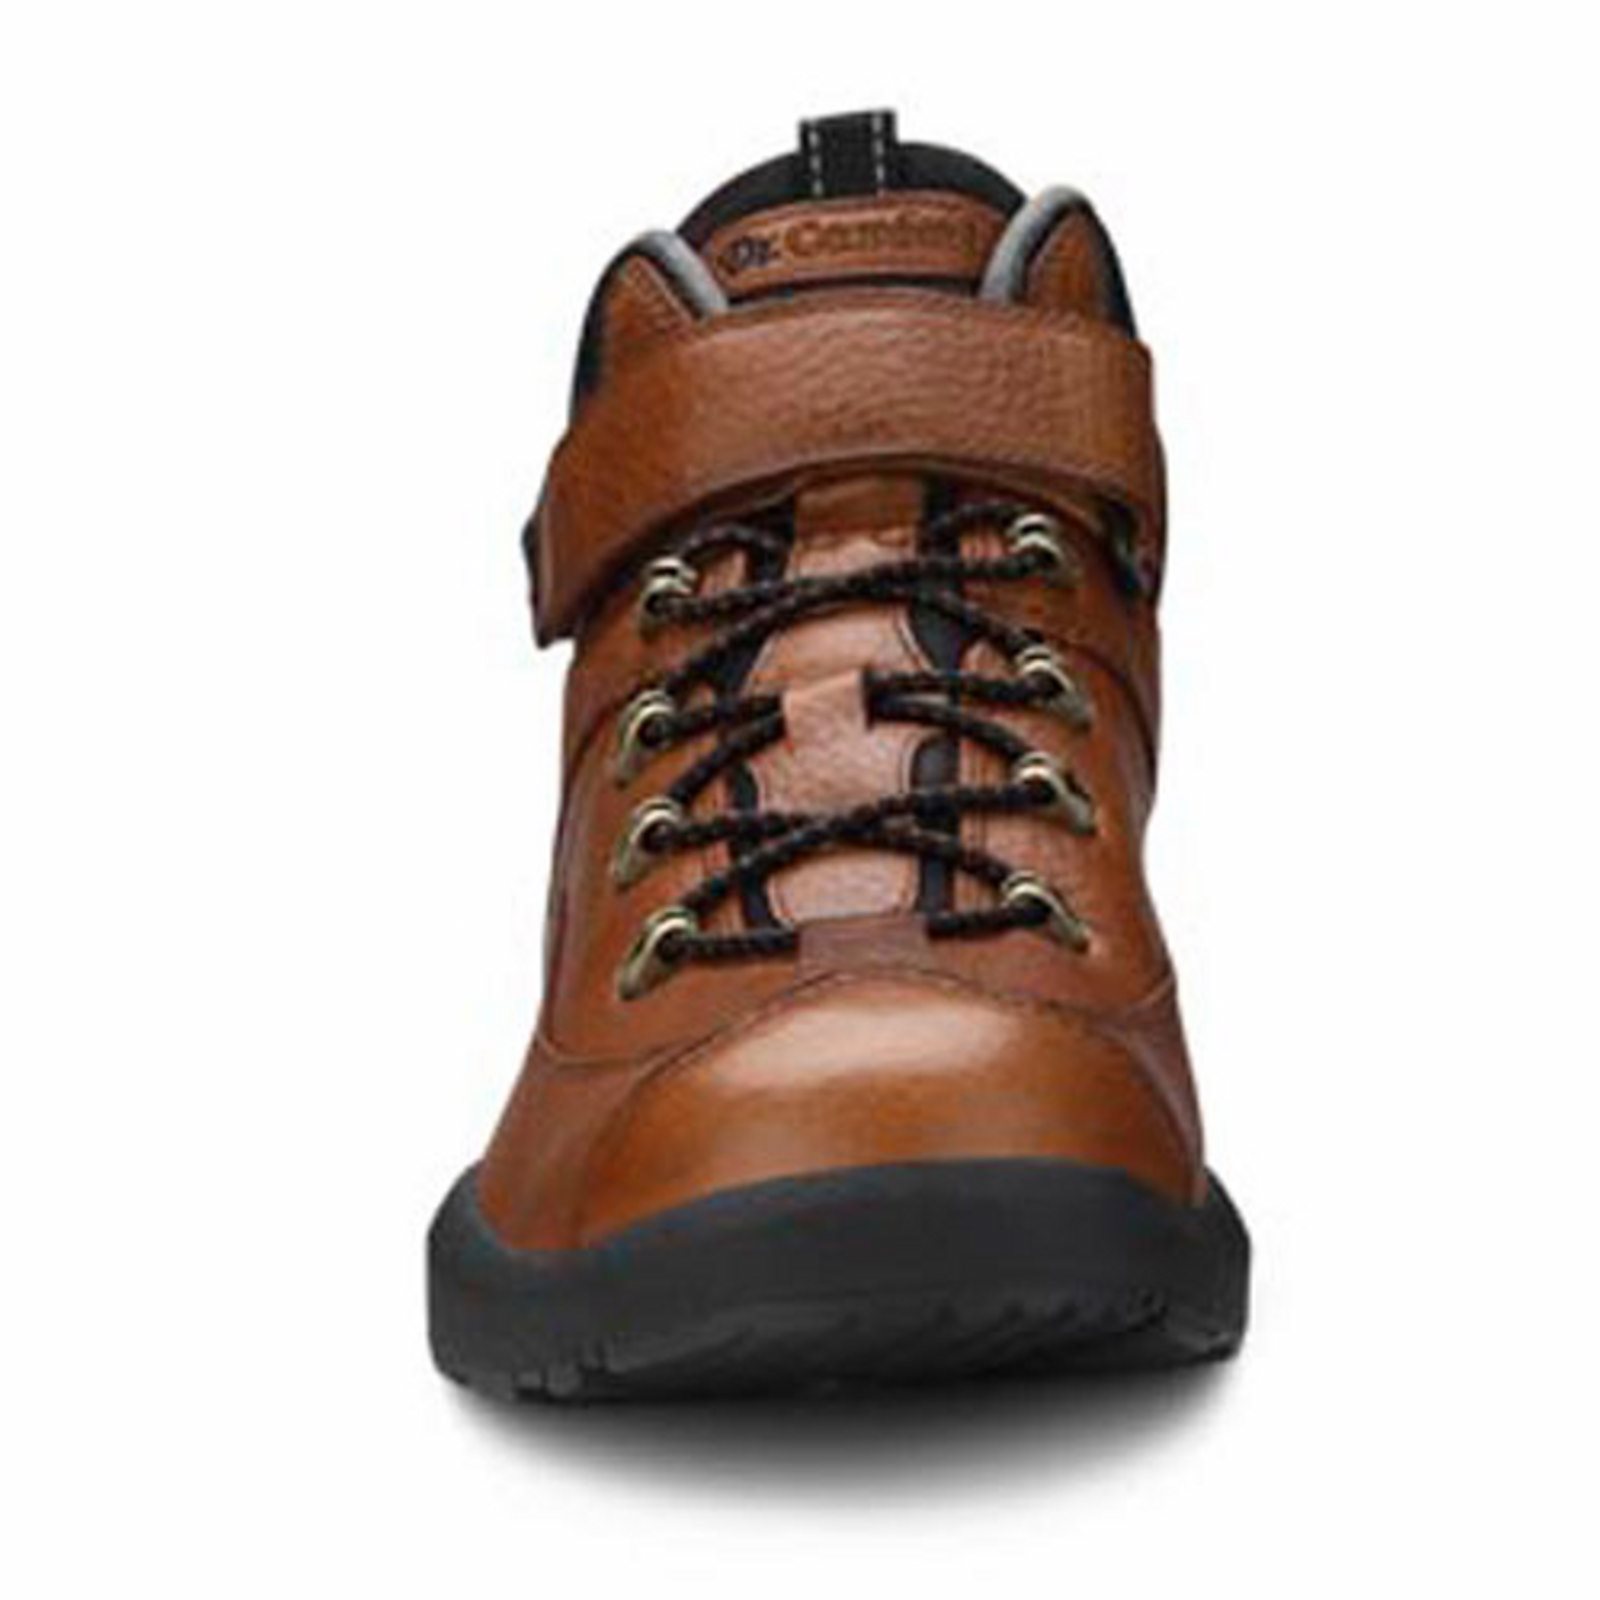 Dr. Comfort Ranger Men's Hiking Boot: 6 Medium (B/D) Black Elastic Lace w/Strap - image 2 of 4